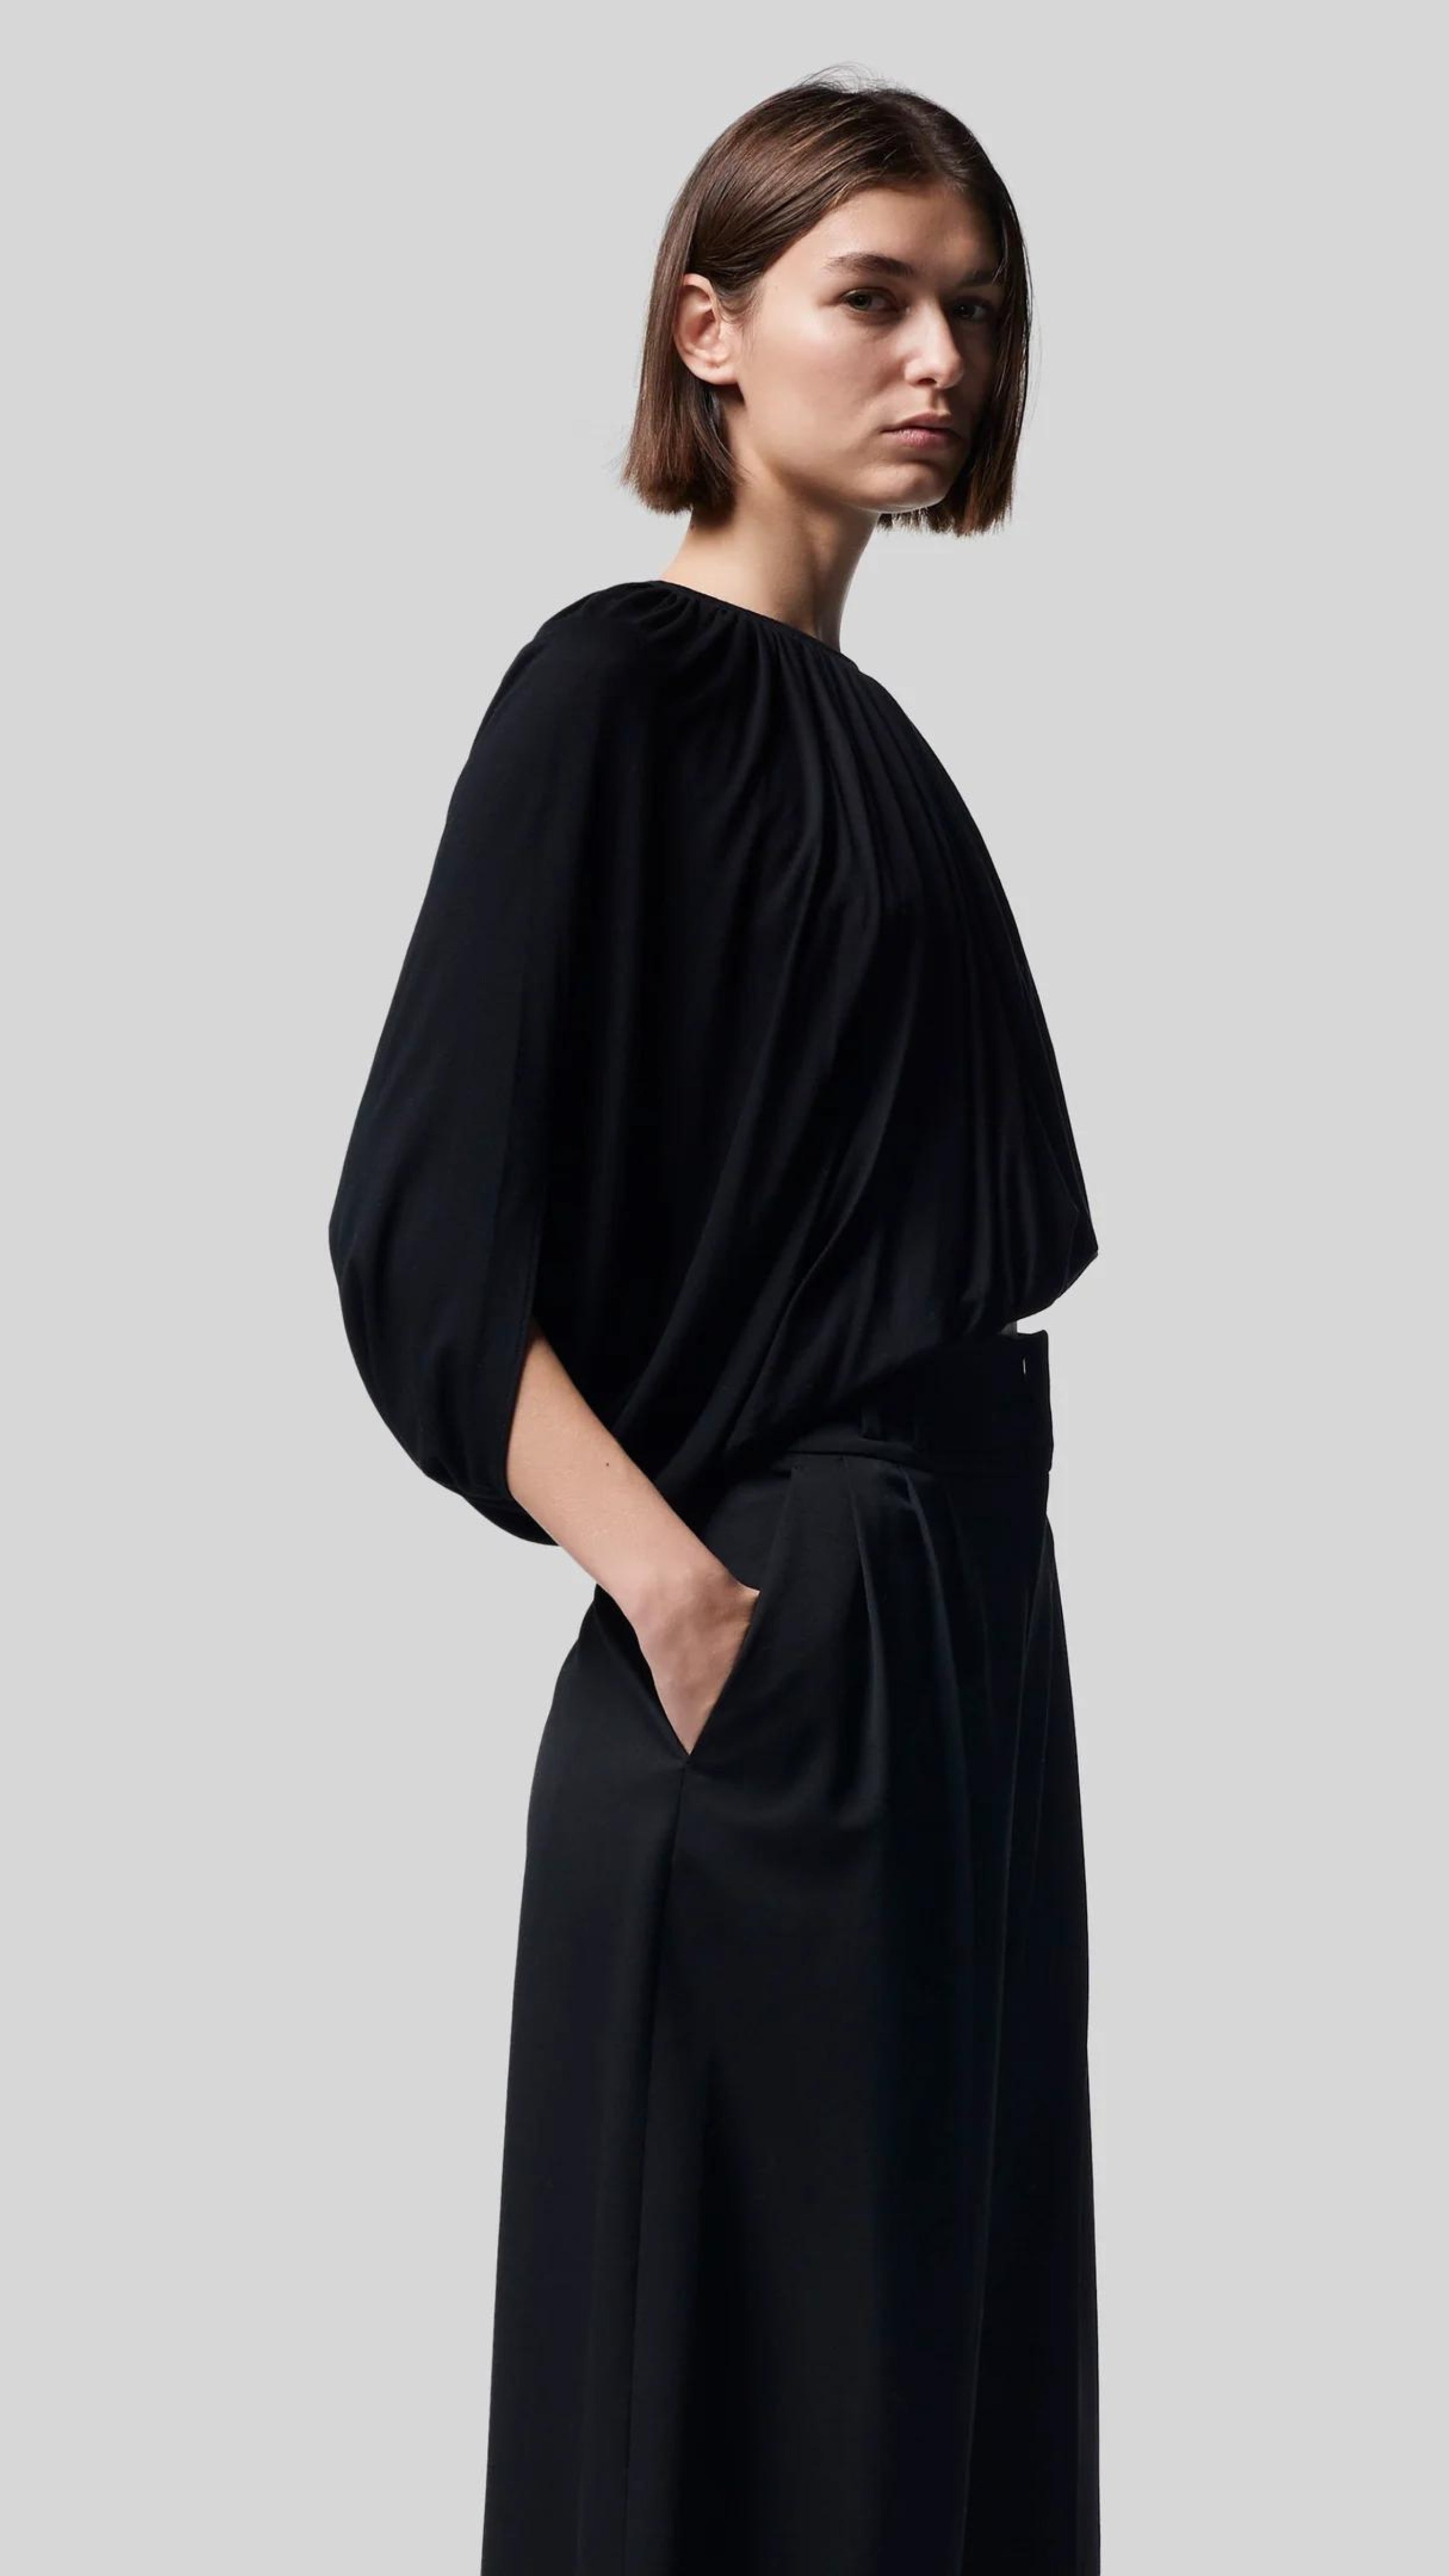 Altuzarra Naxos Top in Black. Draped jersey create a fluid look with an asymmetrical hemline. Shown on model facing to the side.